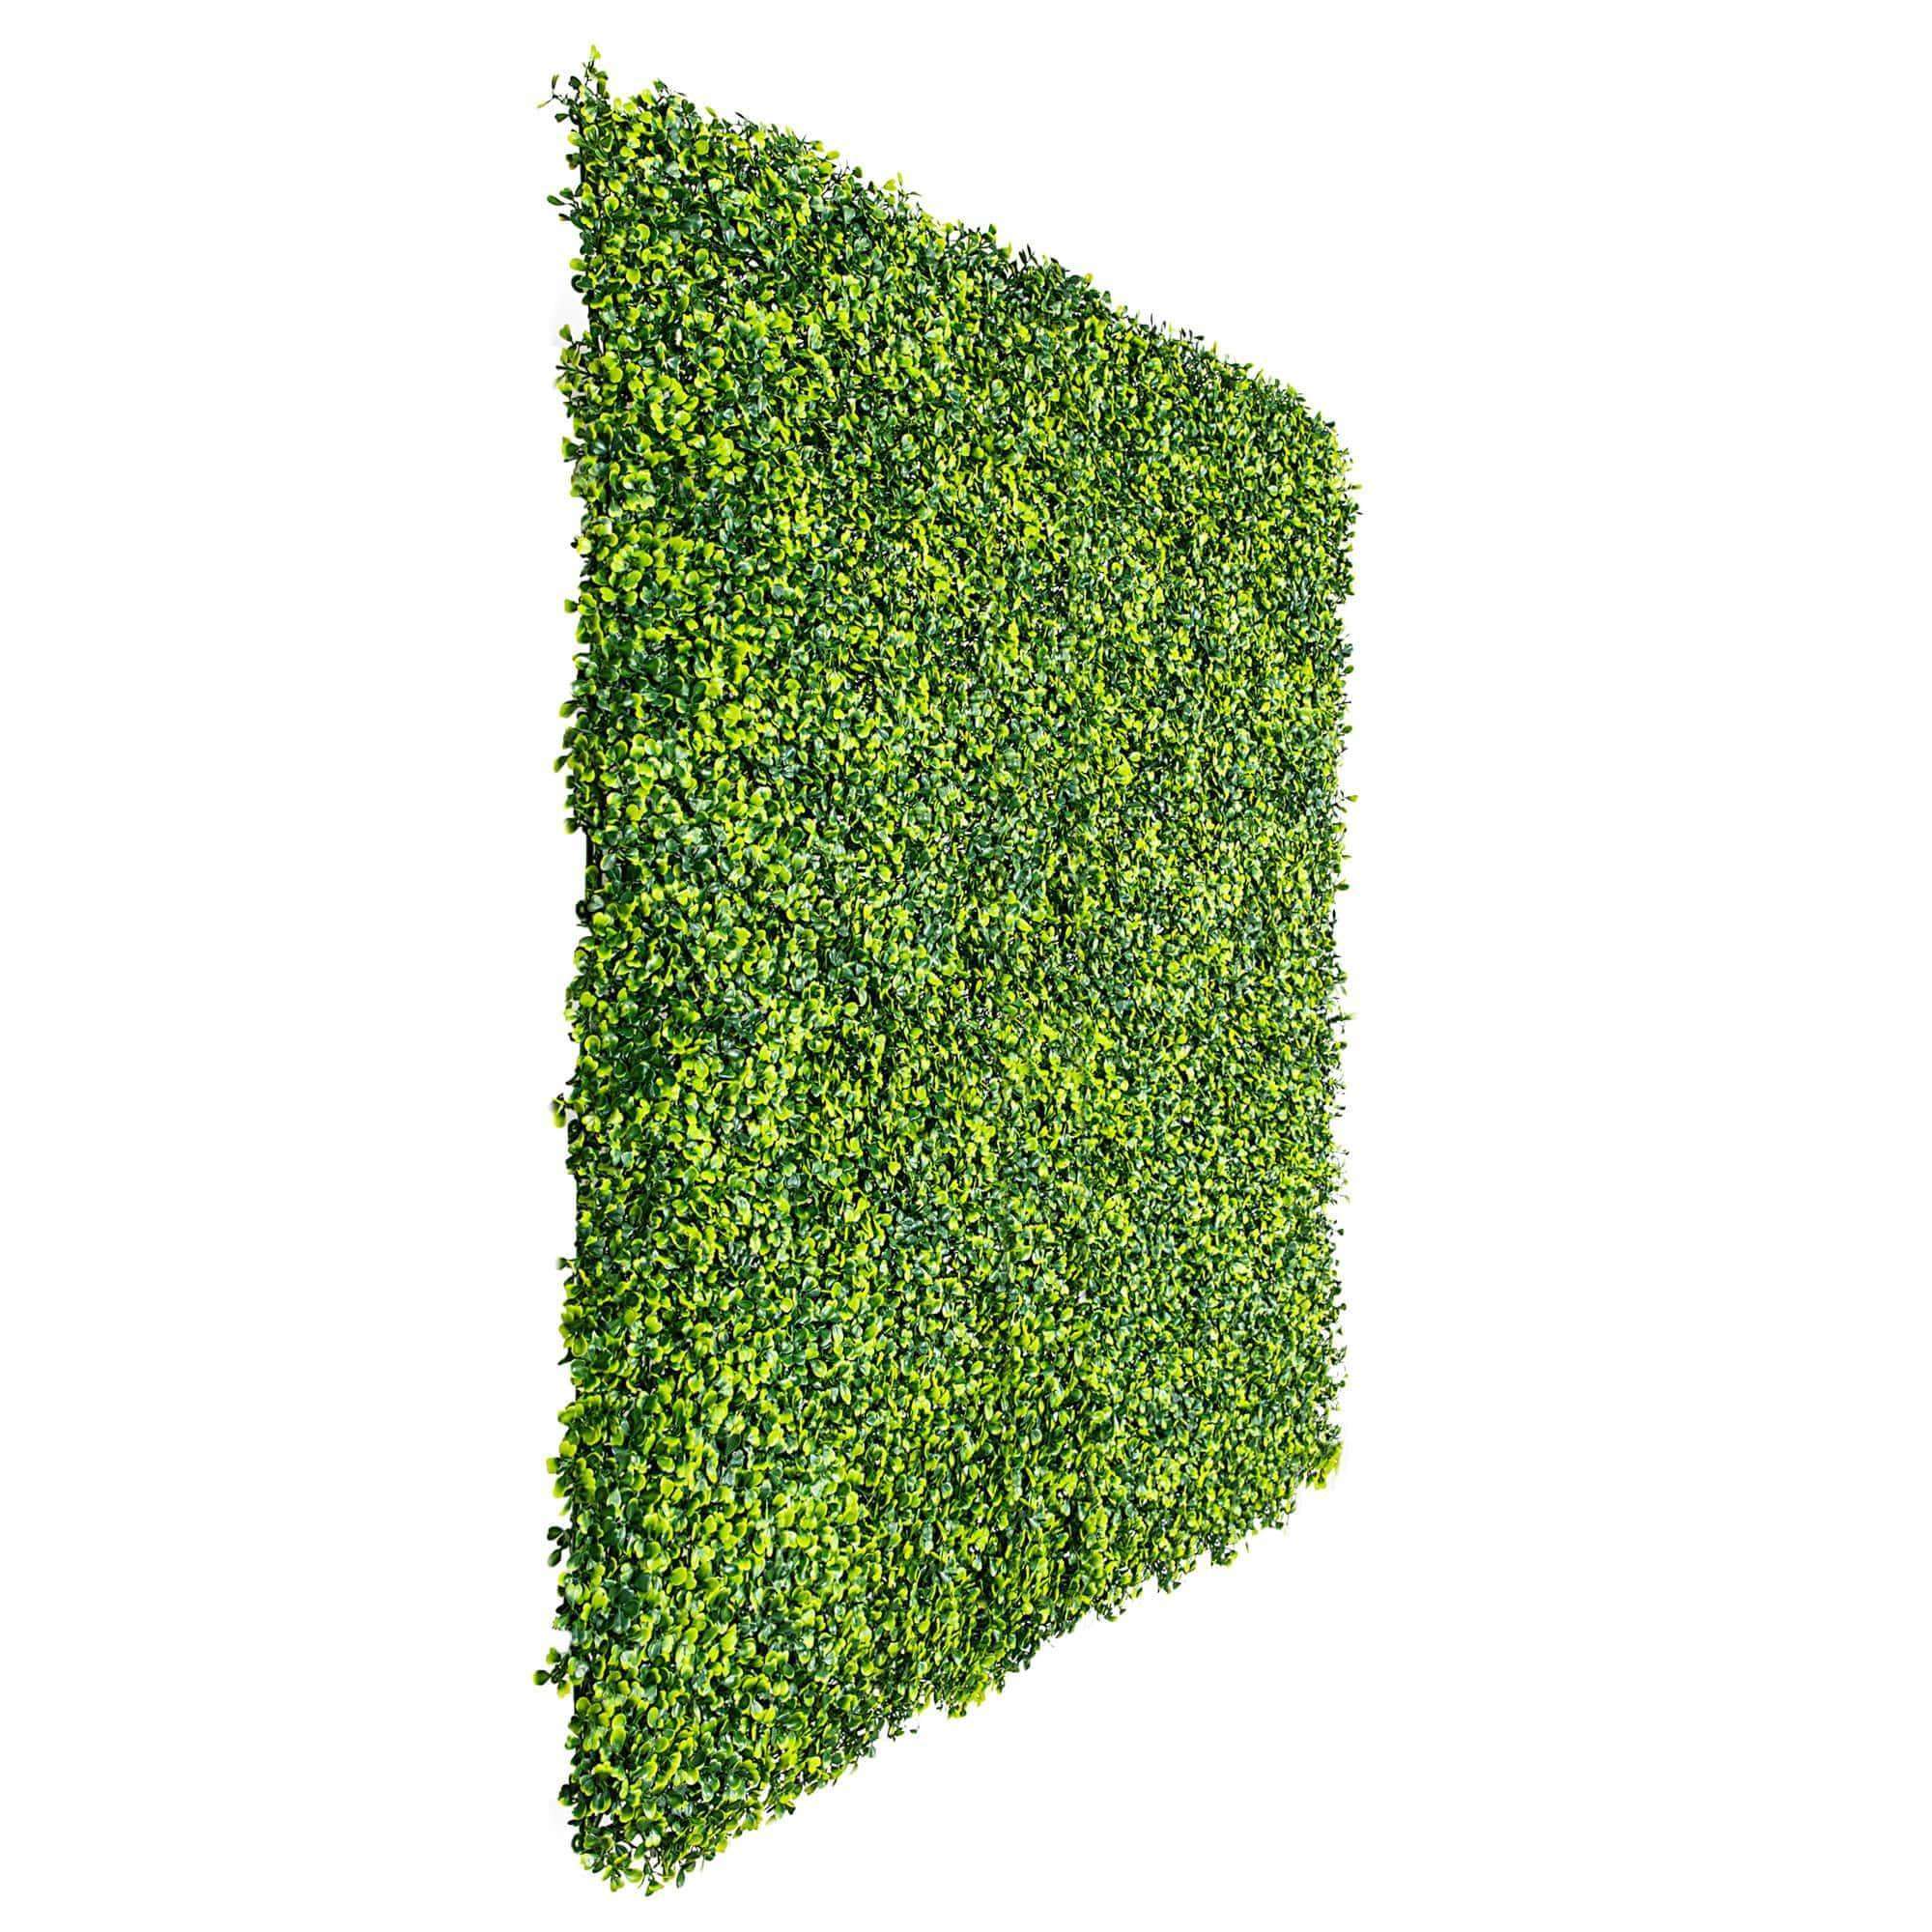 Light English Artificial Boxwood Hedge Panel / Fake Green Wall 1m x 1m UV Resistant - Designer Vertical Gardens artificial garden wall plants artificial green wall australia